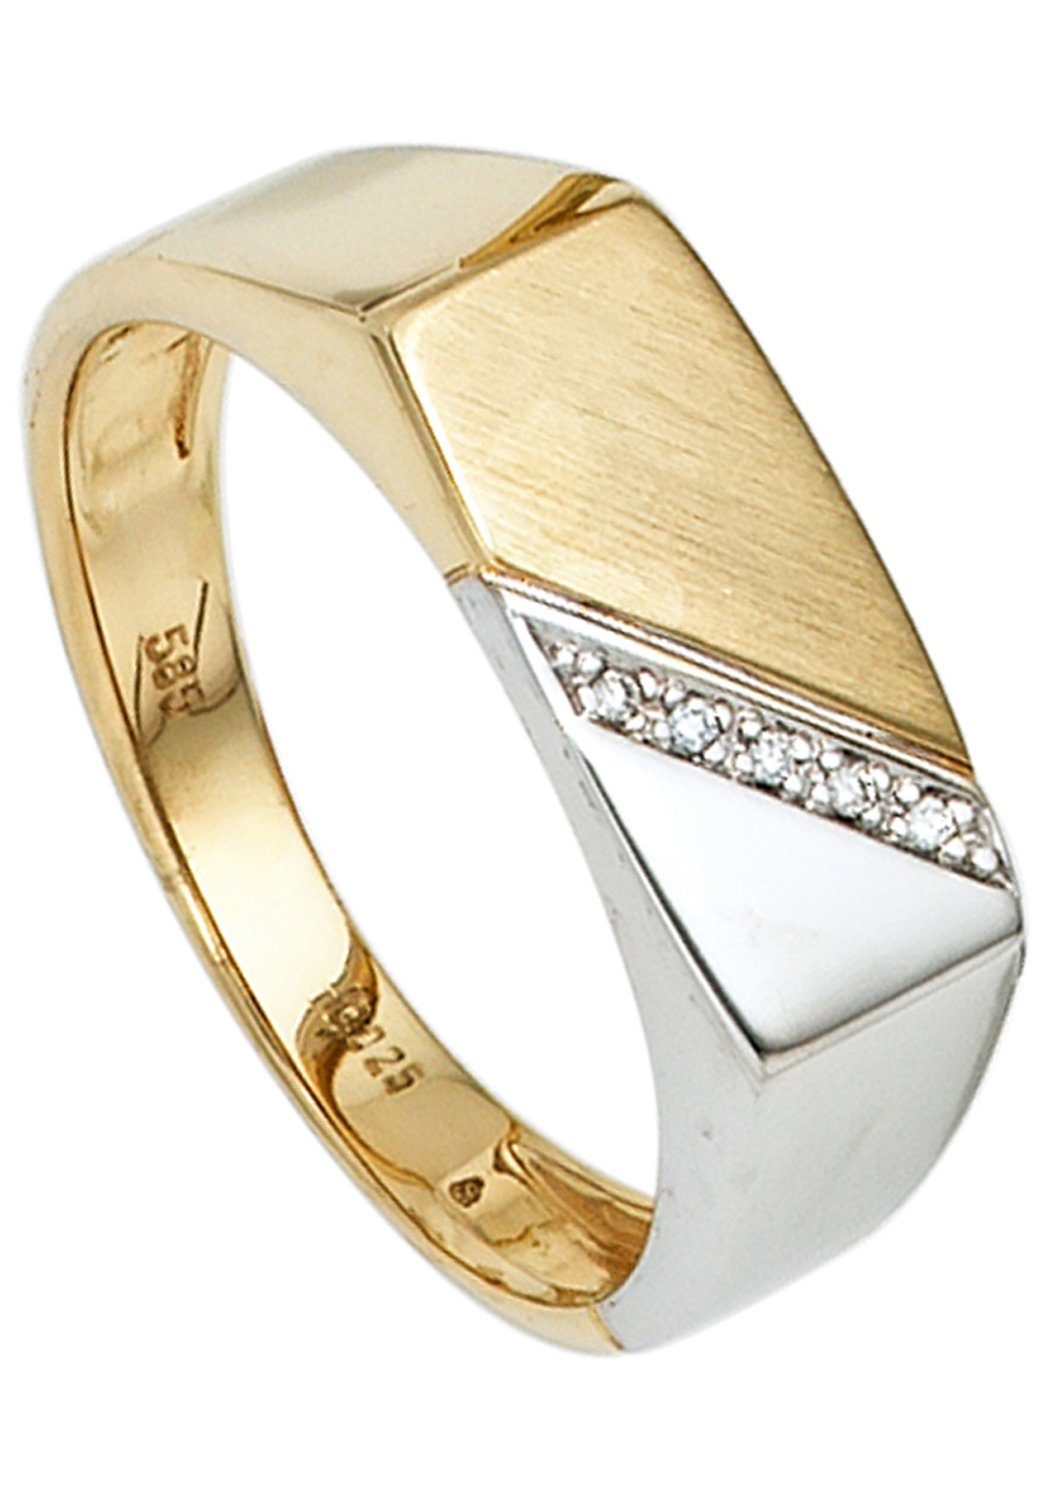 JOBO 585 5 mit bicolor Diamanten Diamantring, Gold